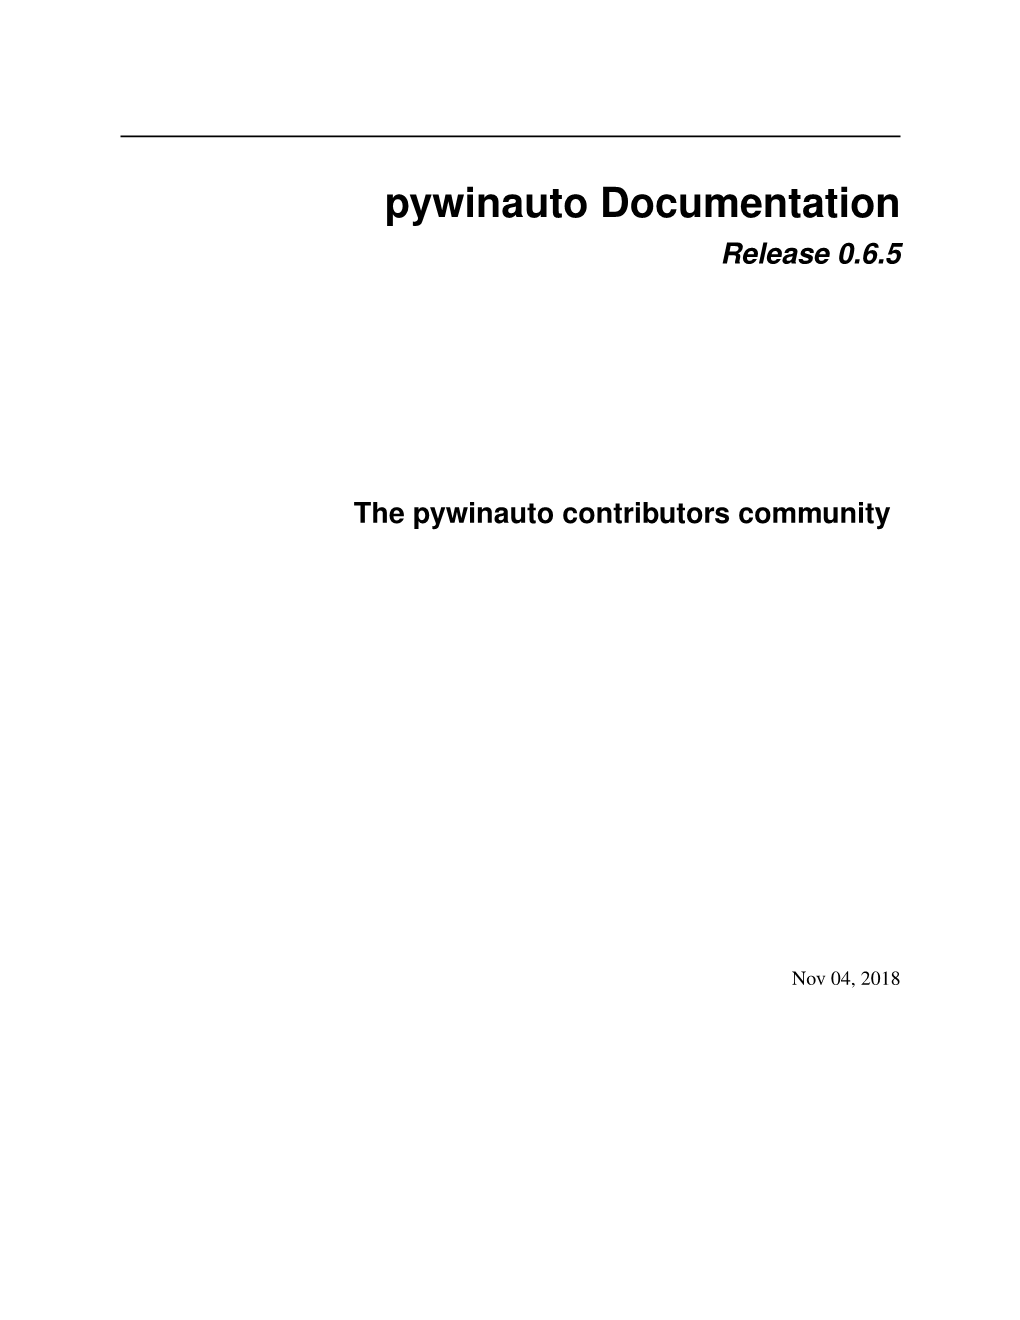 Pywinauto Documentation Release 0.6.5